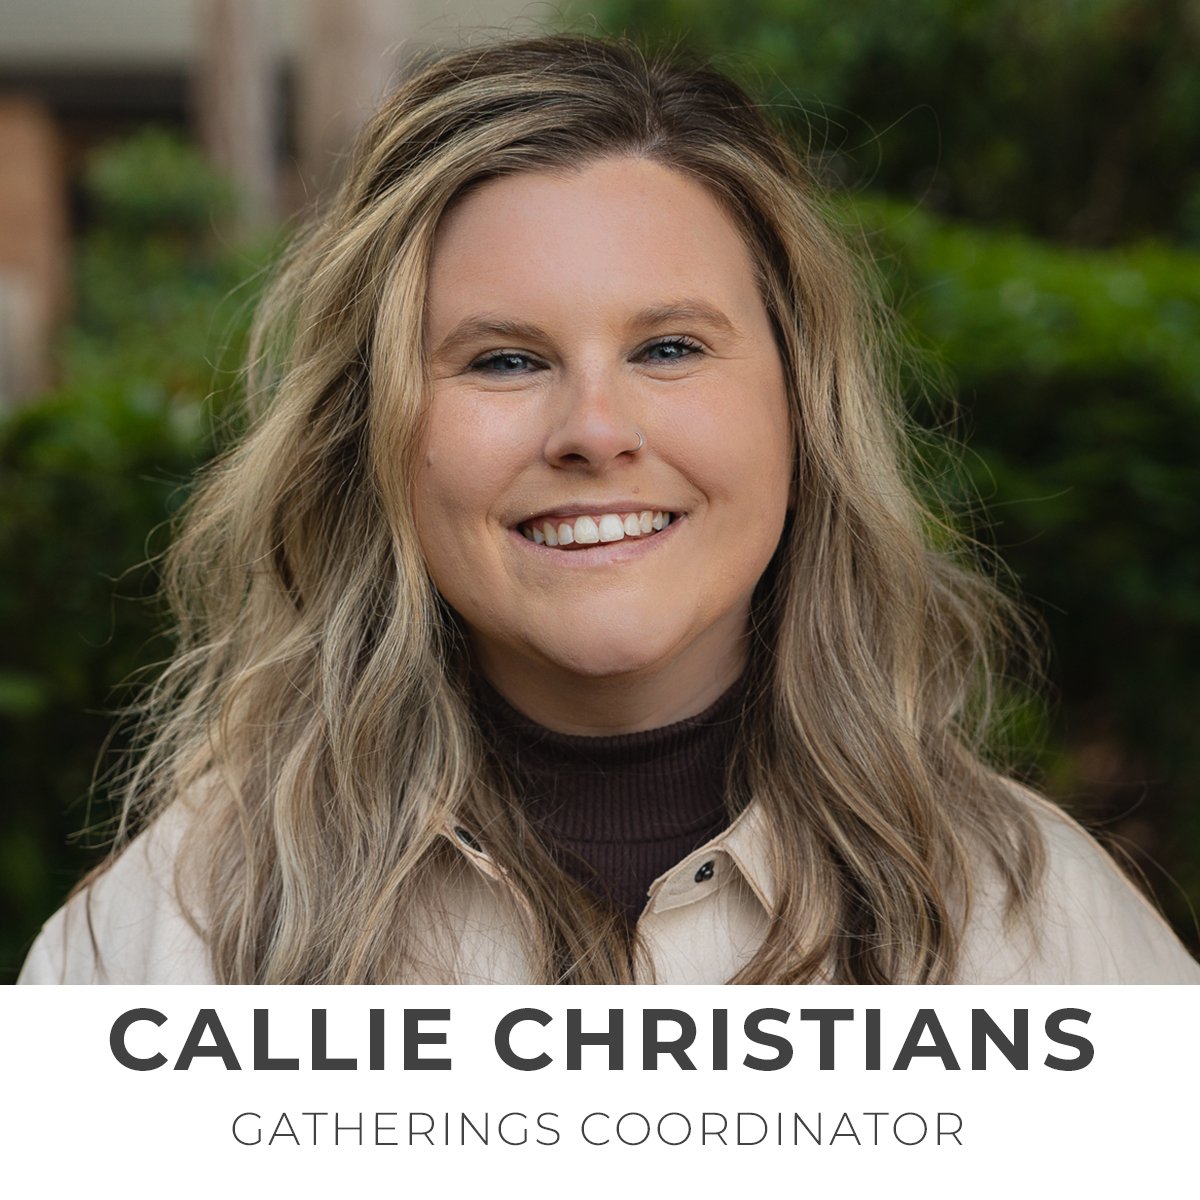 Callie Christians, Gatherings Coordinator